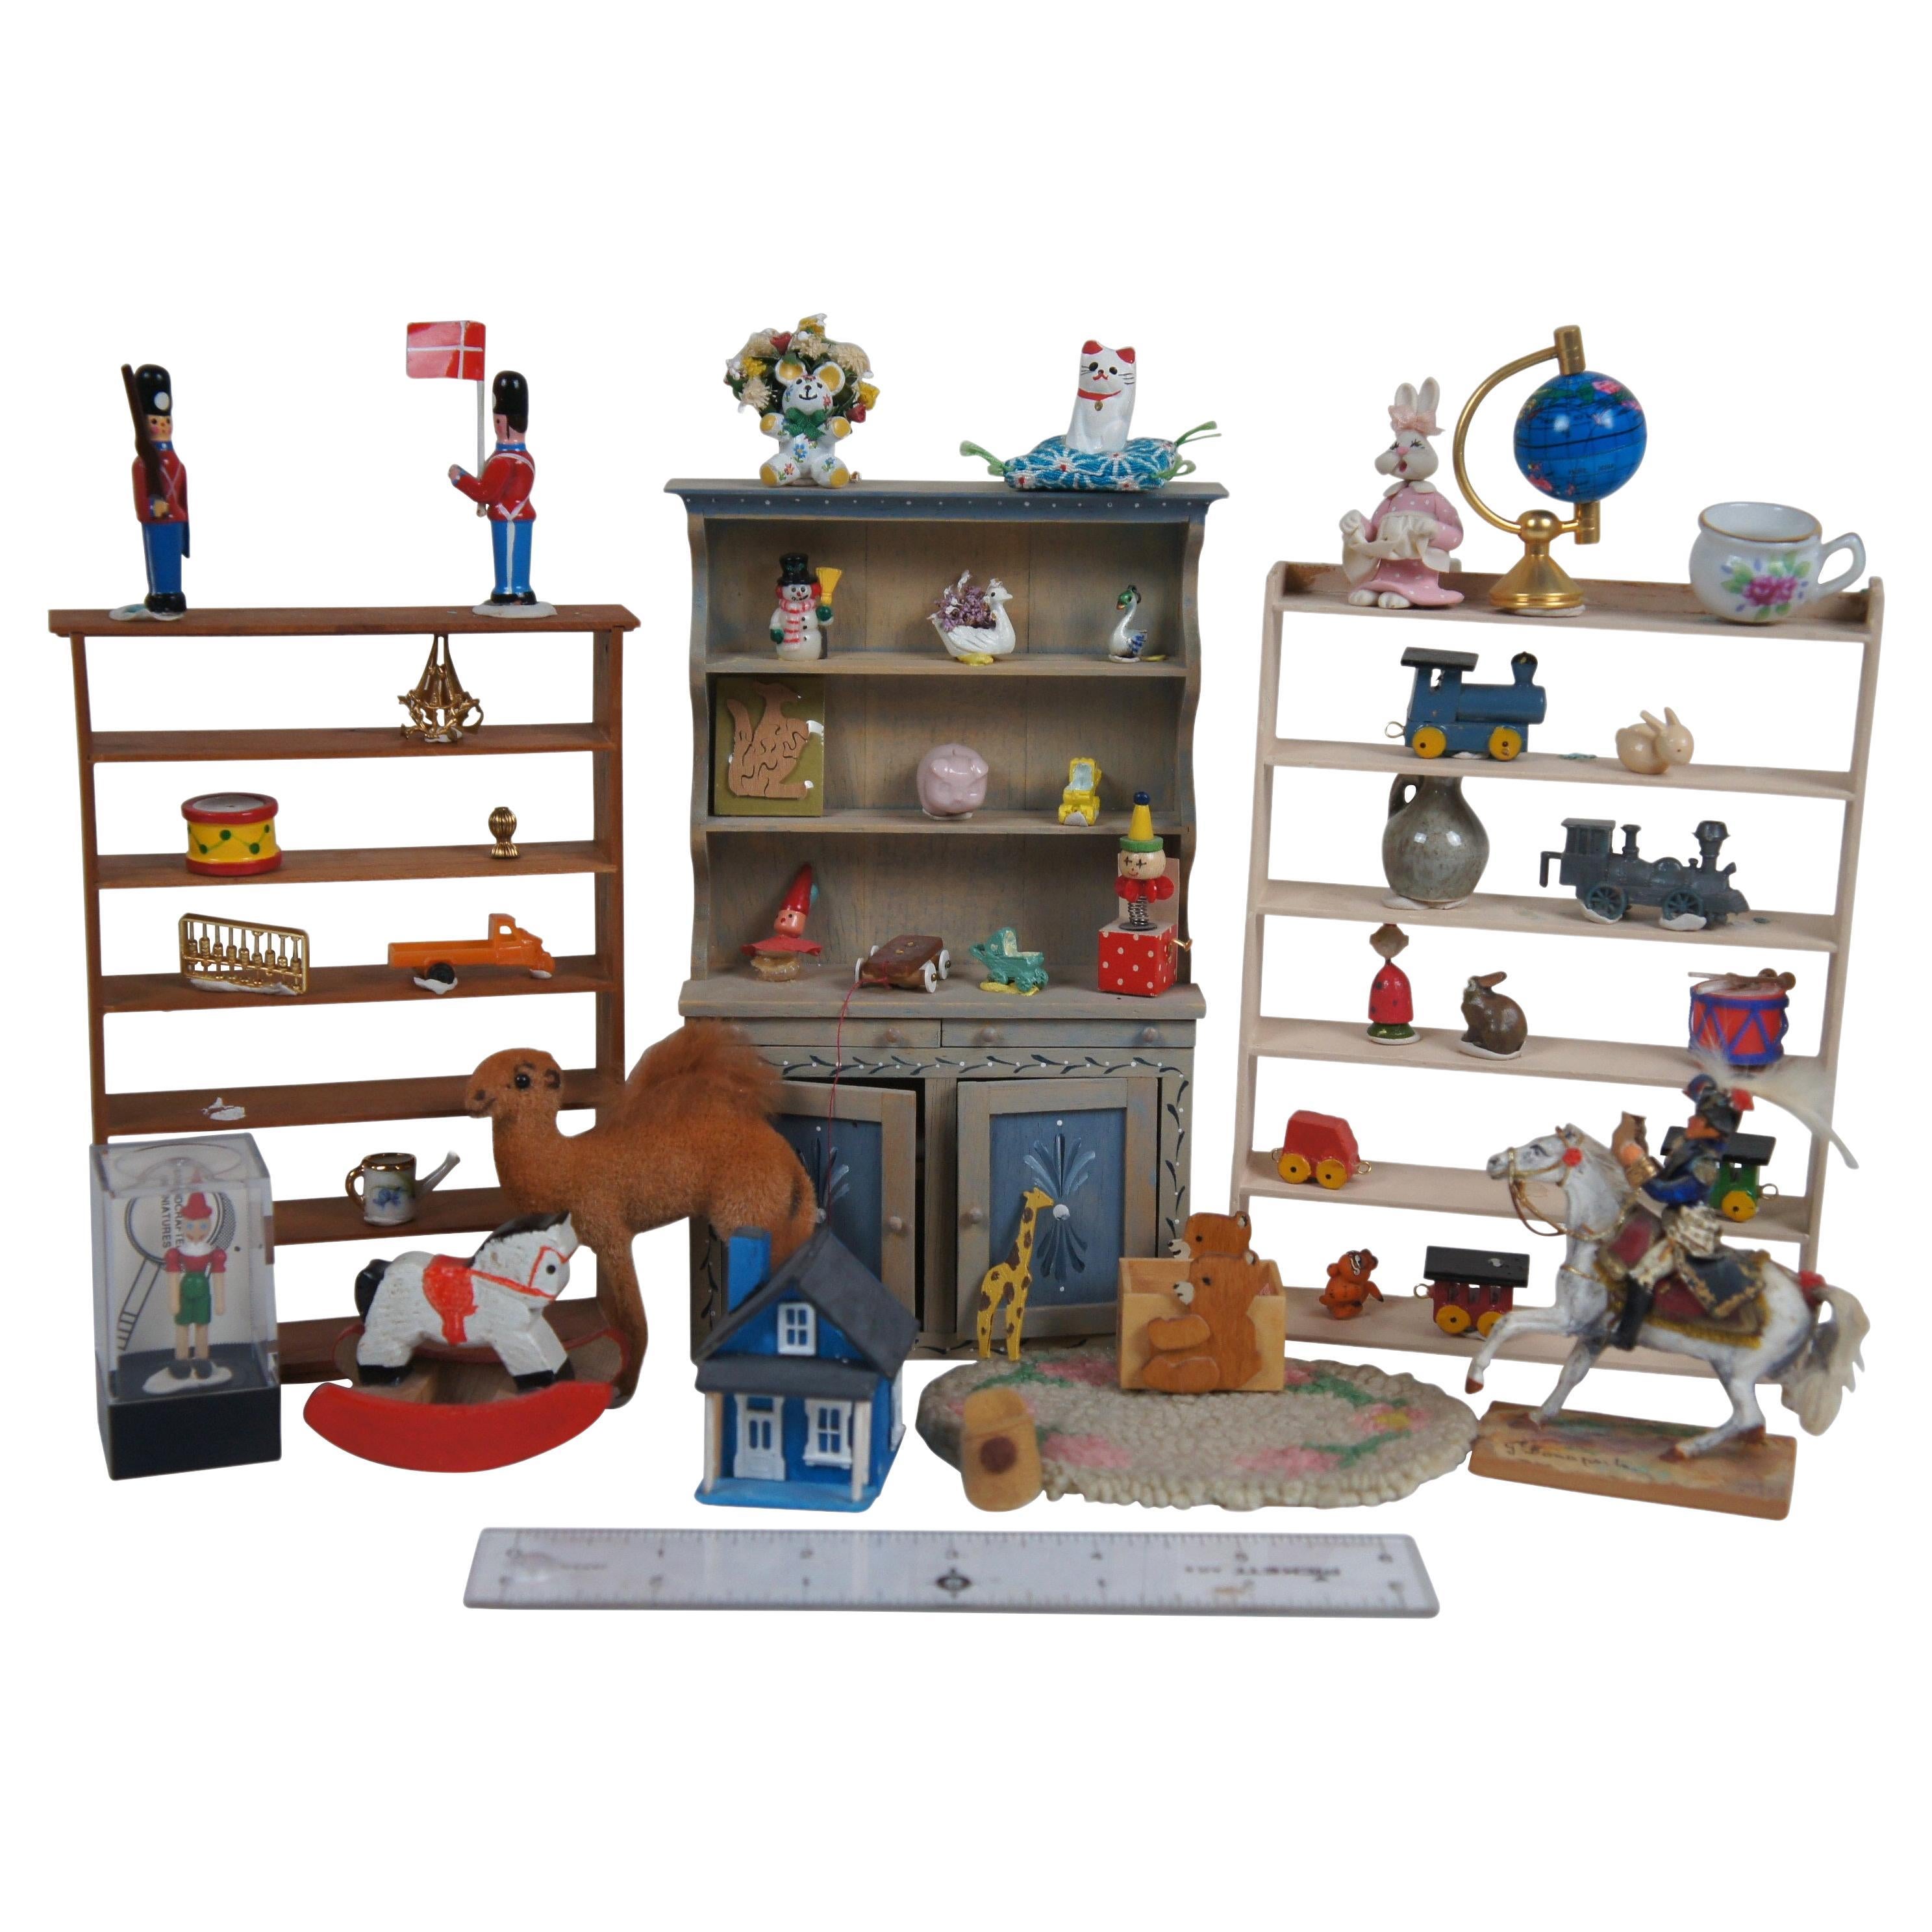 Massive 300+ Pc Lot Vintage Dollhouse Miniature Furniture Toys Accessories For Sale